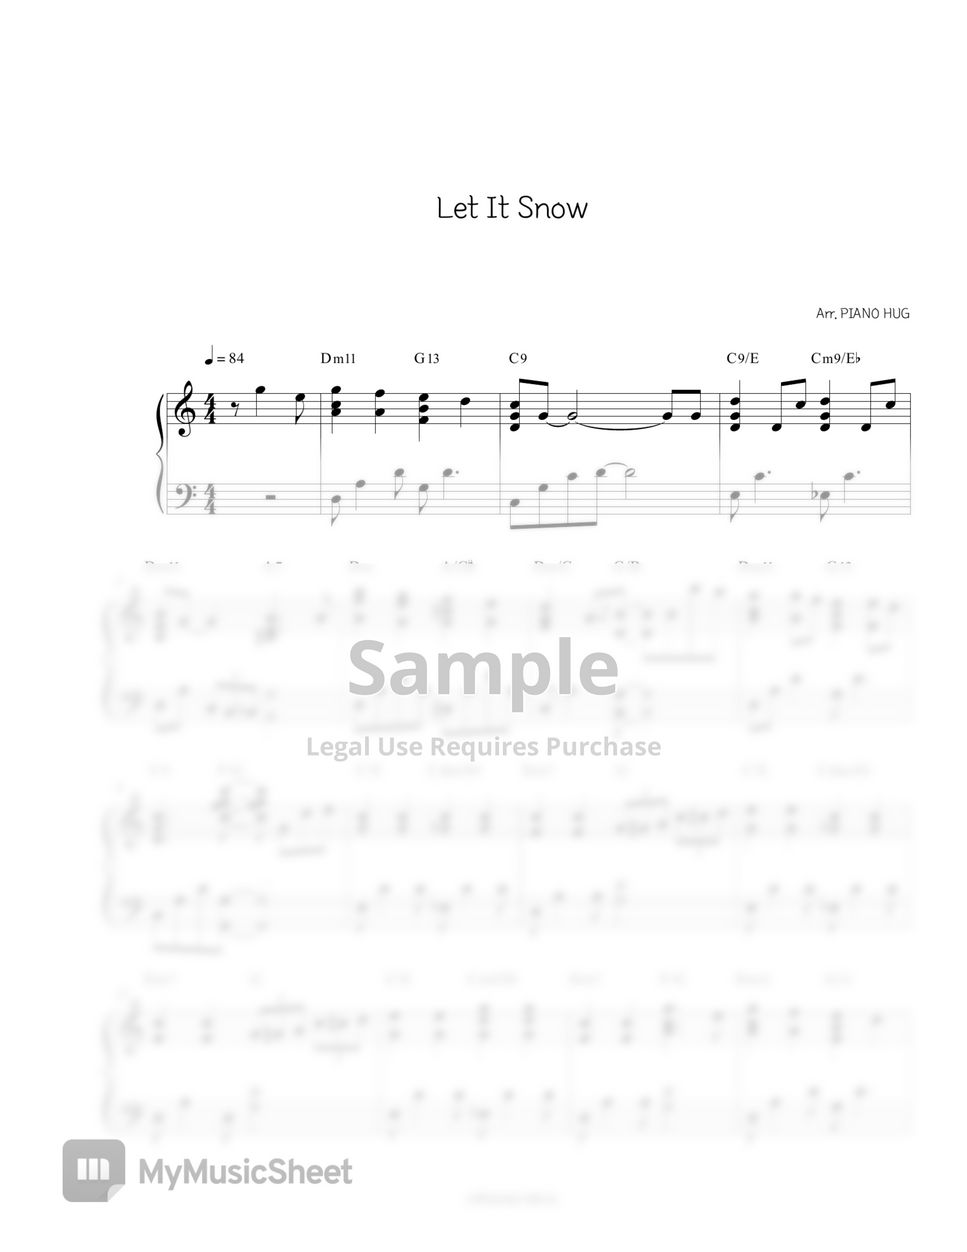 Christmas Carol🎄 - Let It Snow by Piano Hug